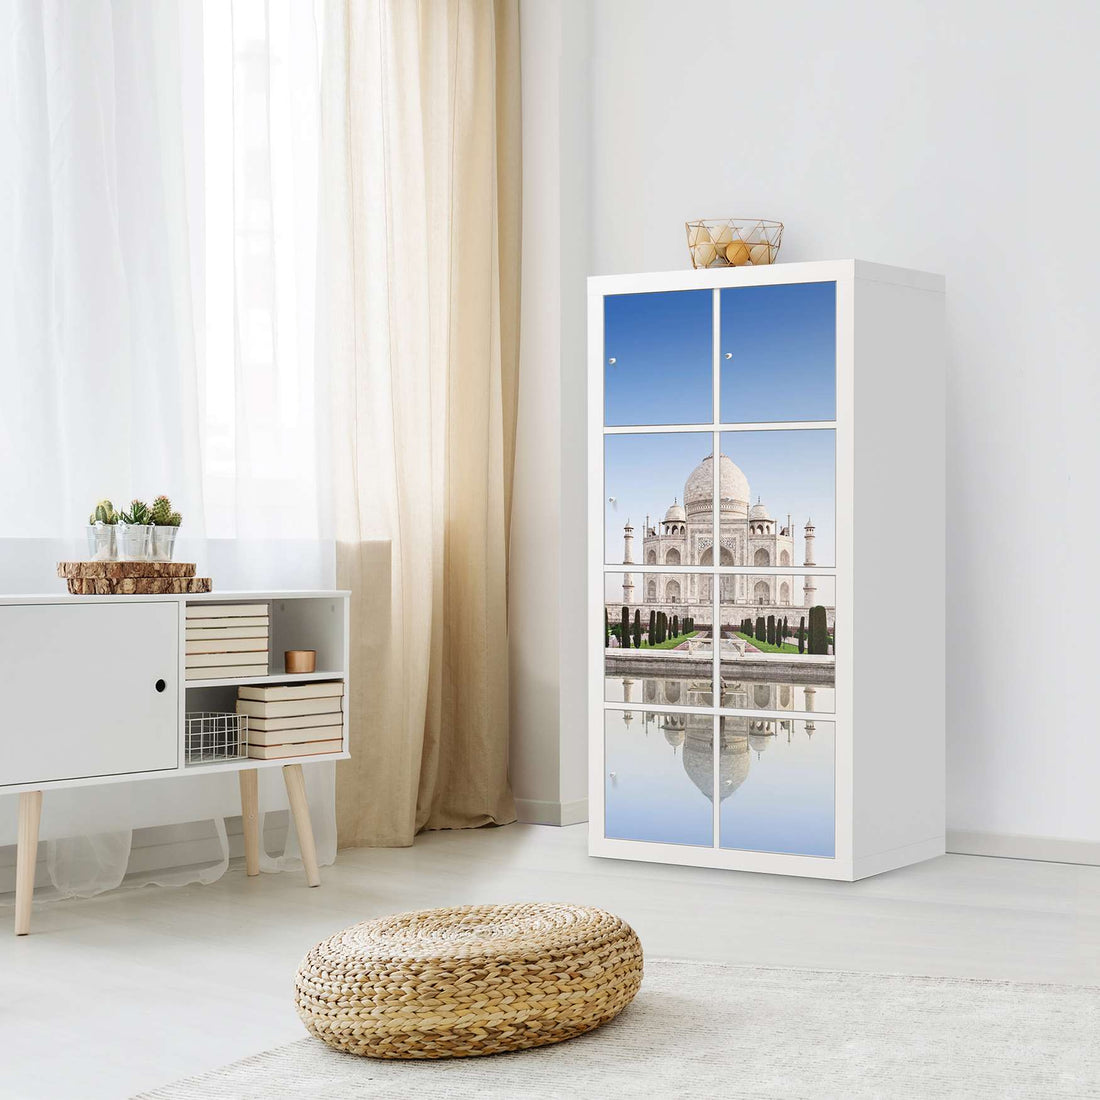 Folie für Möbel Taj Mahal - IKEA Kallax Regal 8 Türen - Wohnzimmer